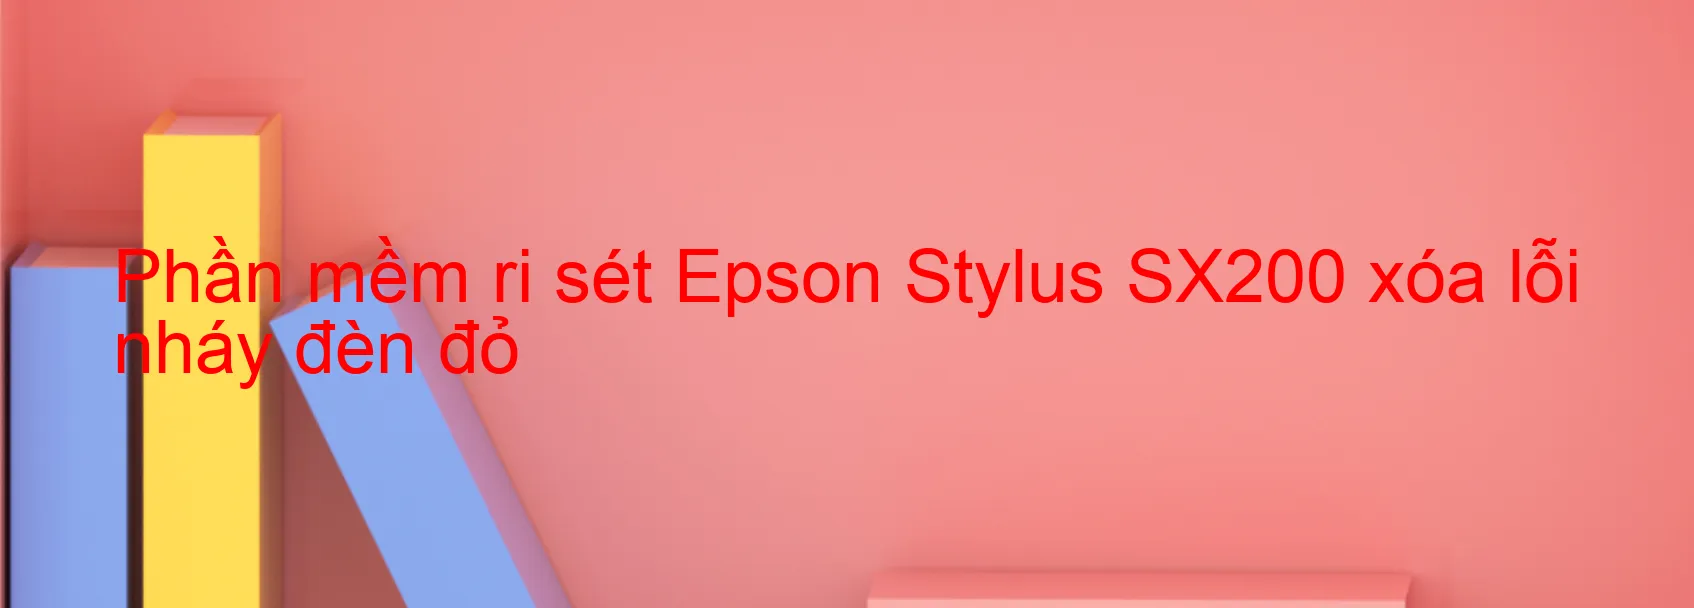 Phần mềm reset Epson Stylus SX200 xóa lỗi nháy đèn đỏ